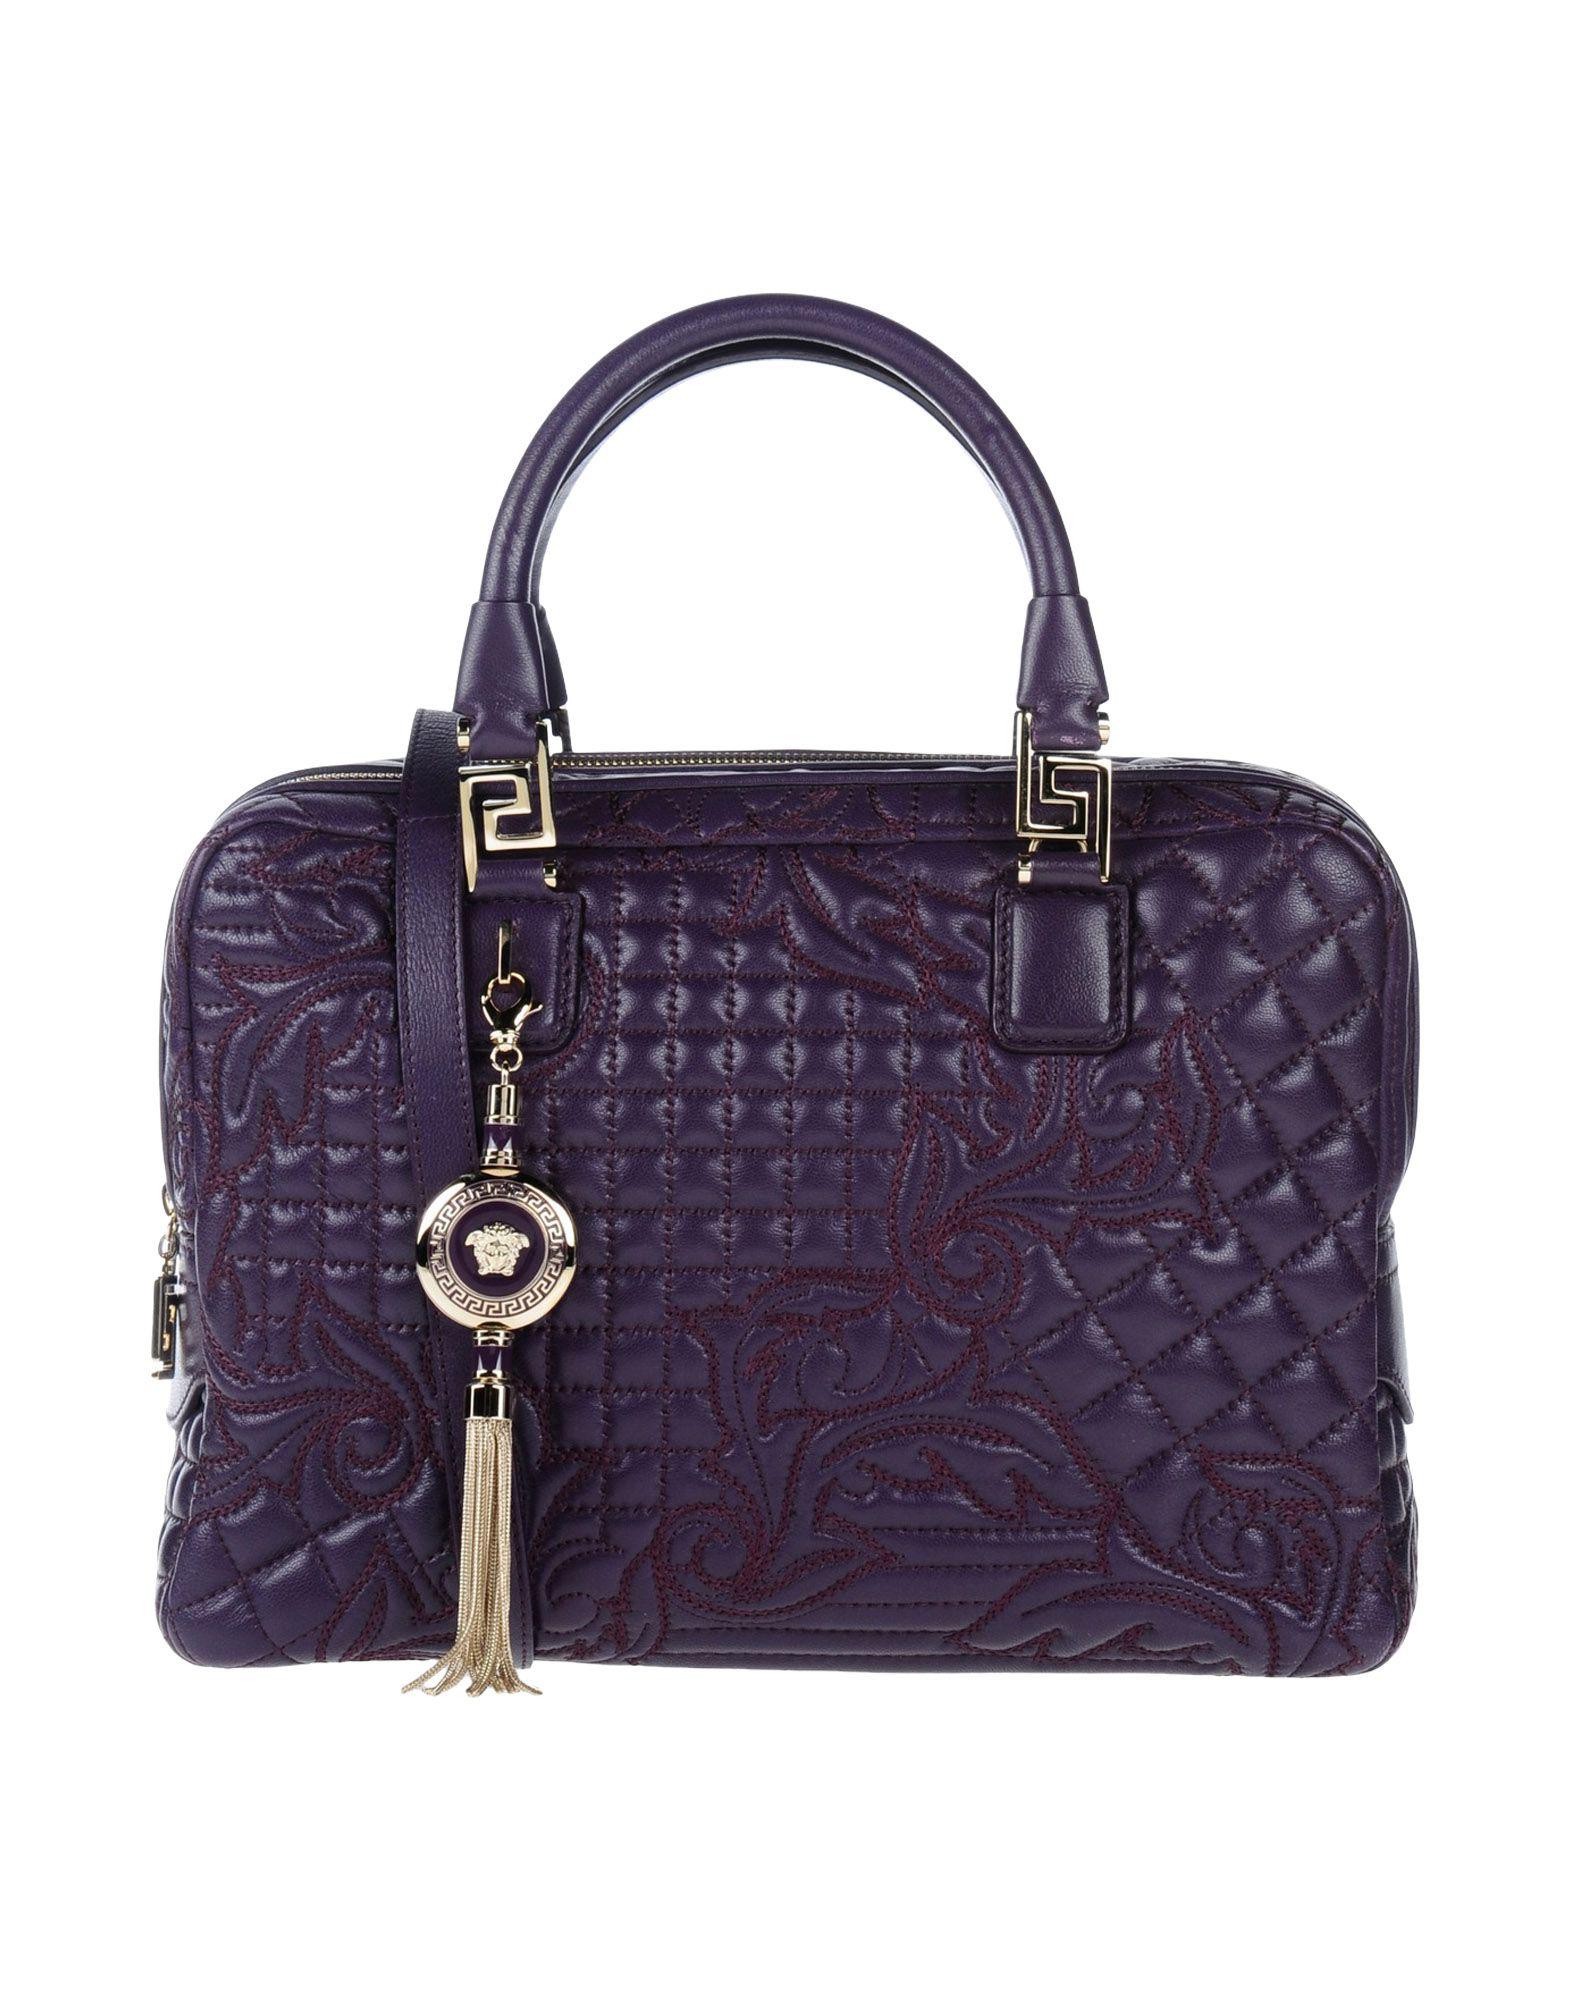 Versace Leather Handbag in Purple - Lyst